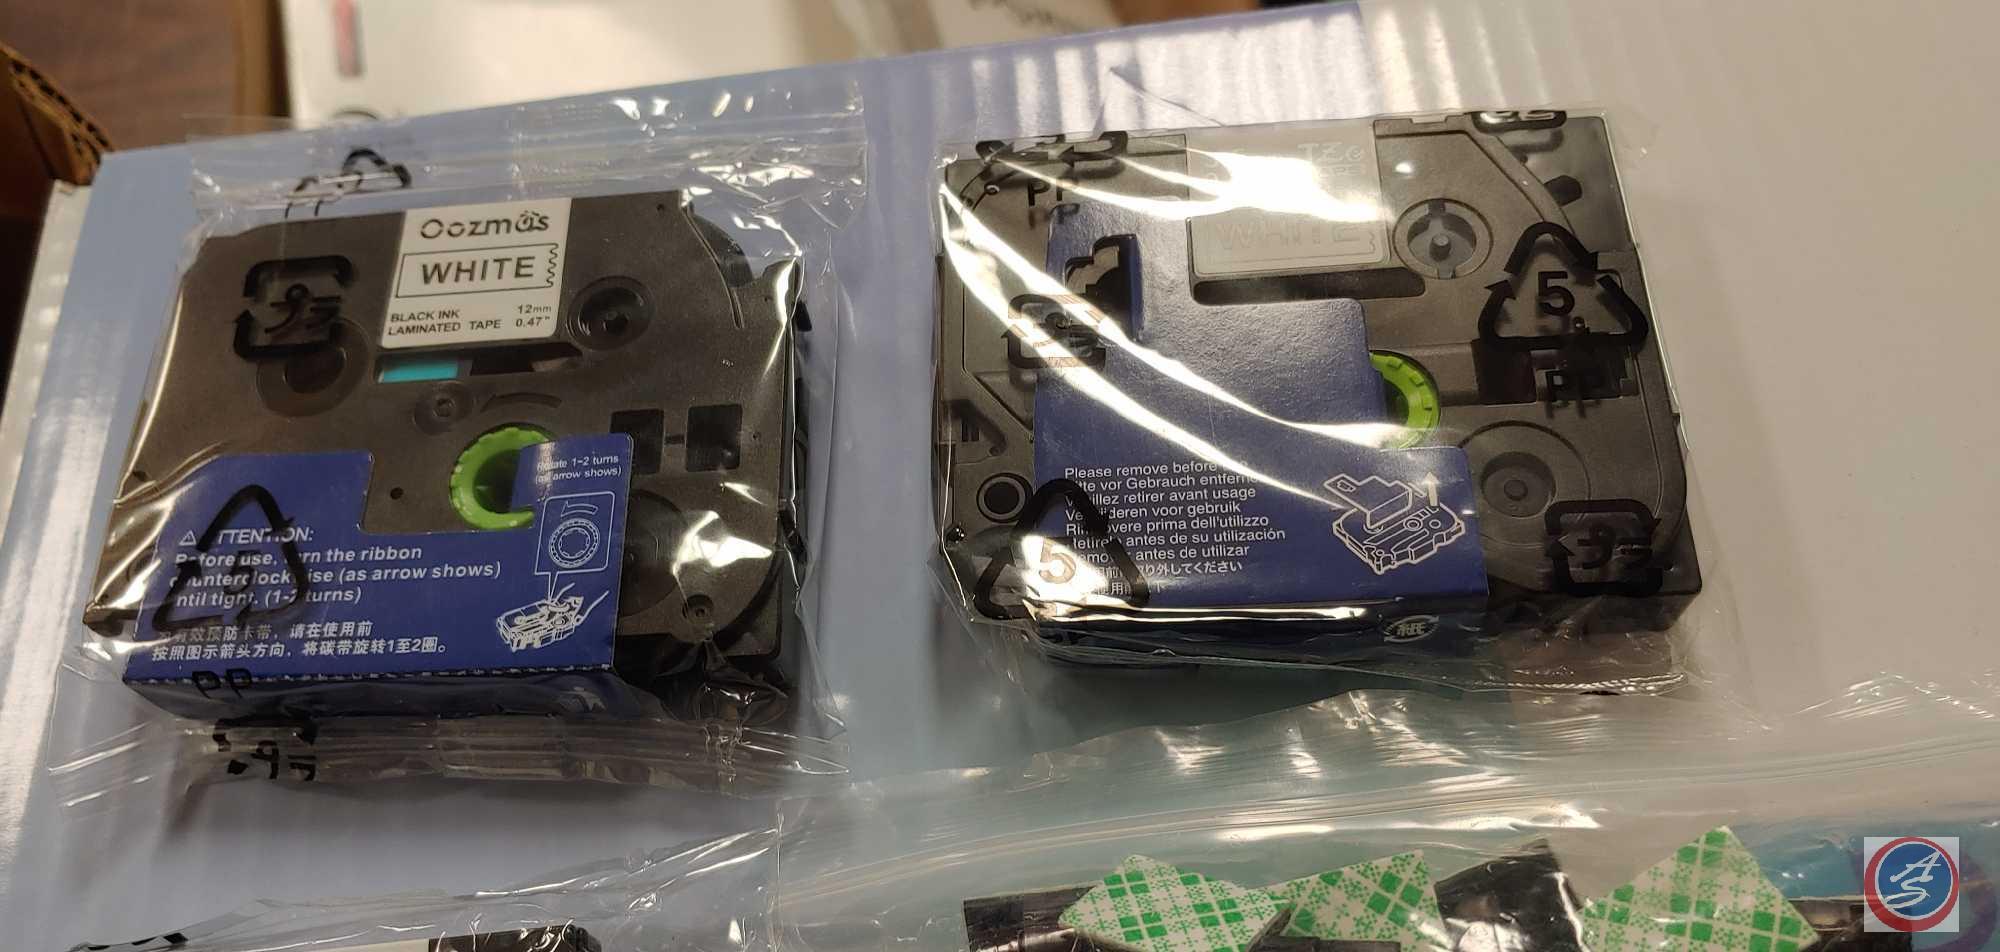 (1) Box of assorted Toner...cartridges, YN433(K),AZ-TN-433BK, OOzmo's Black Ink Laminated Tape, Eboo